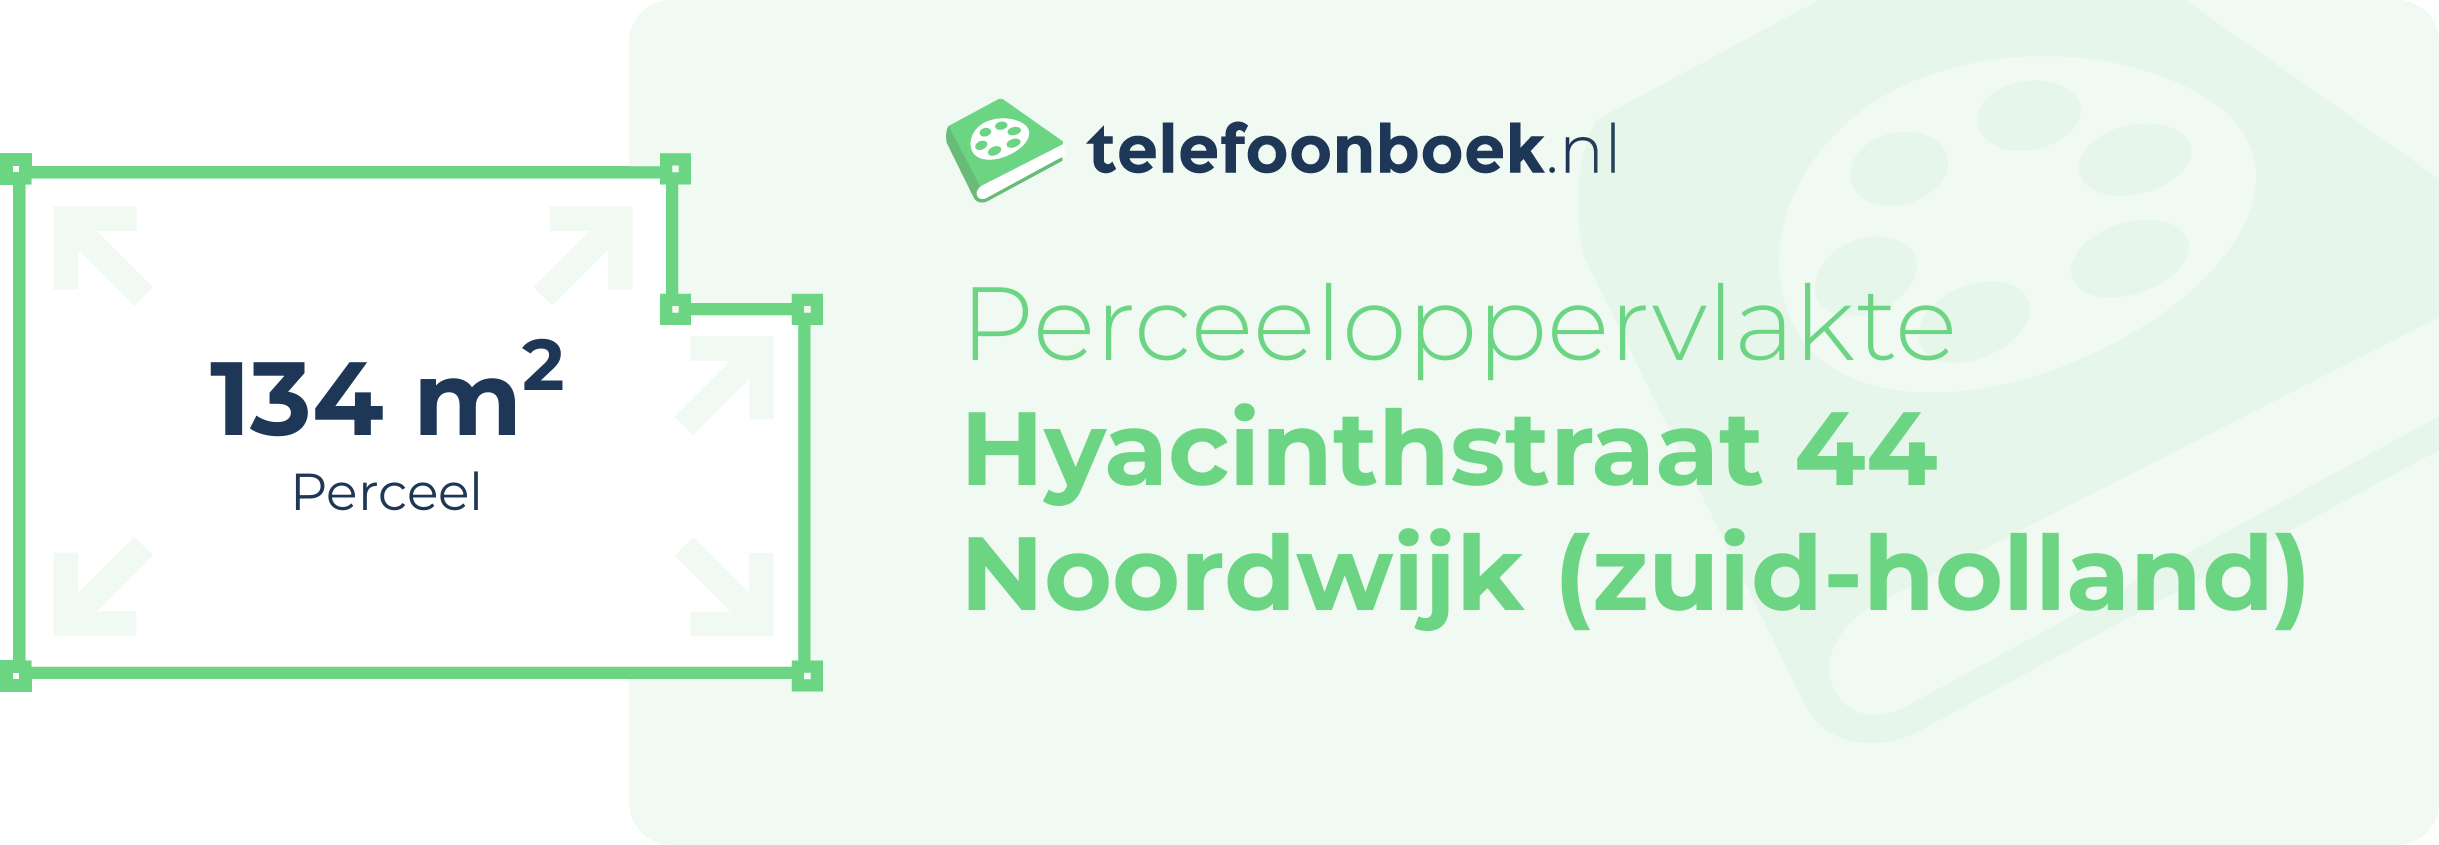 Perceeloppervlakte Hyacinthstraat 44 Noordwijk (Zuid-Holland)